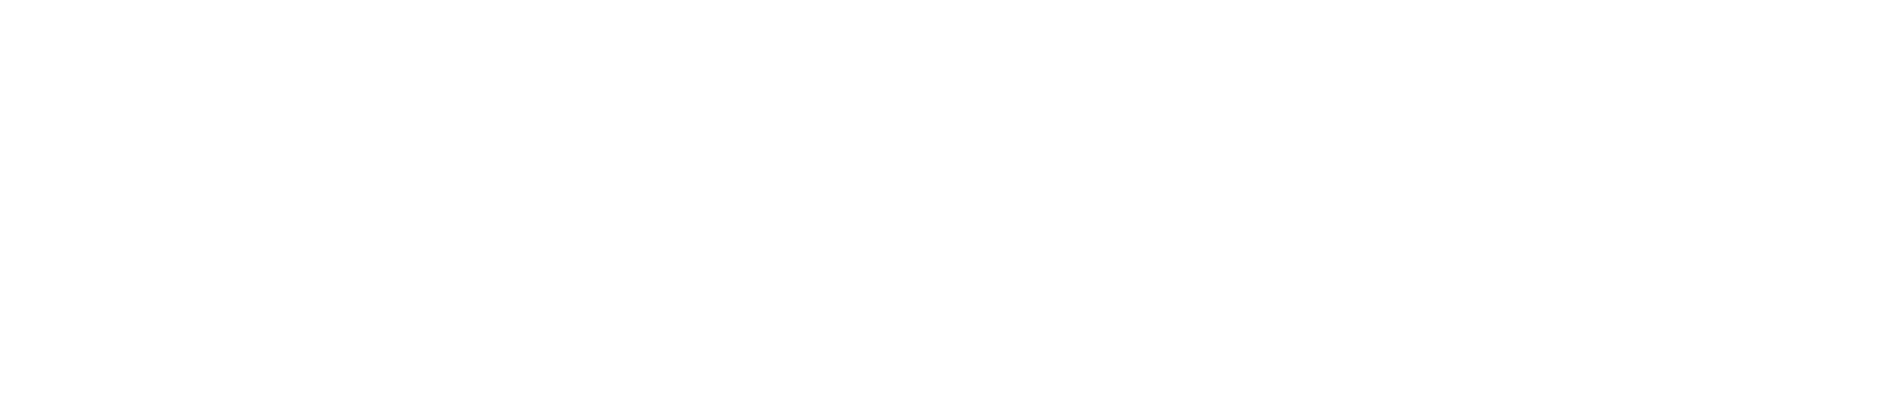 Logo Onlyfans